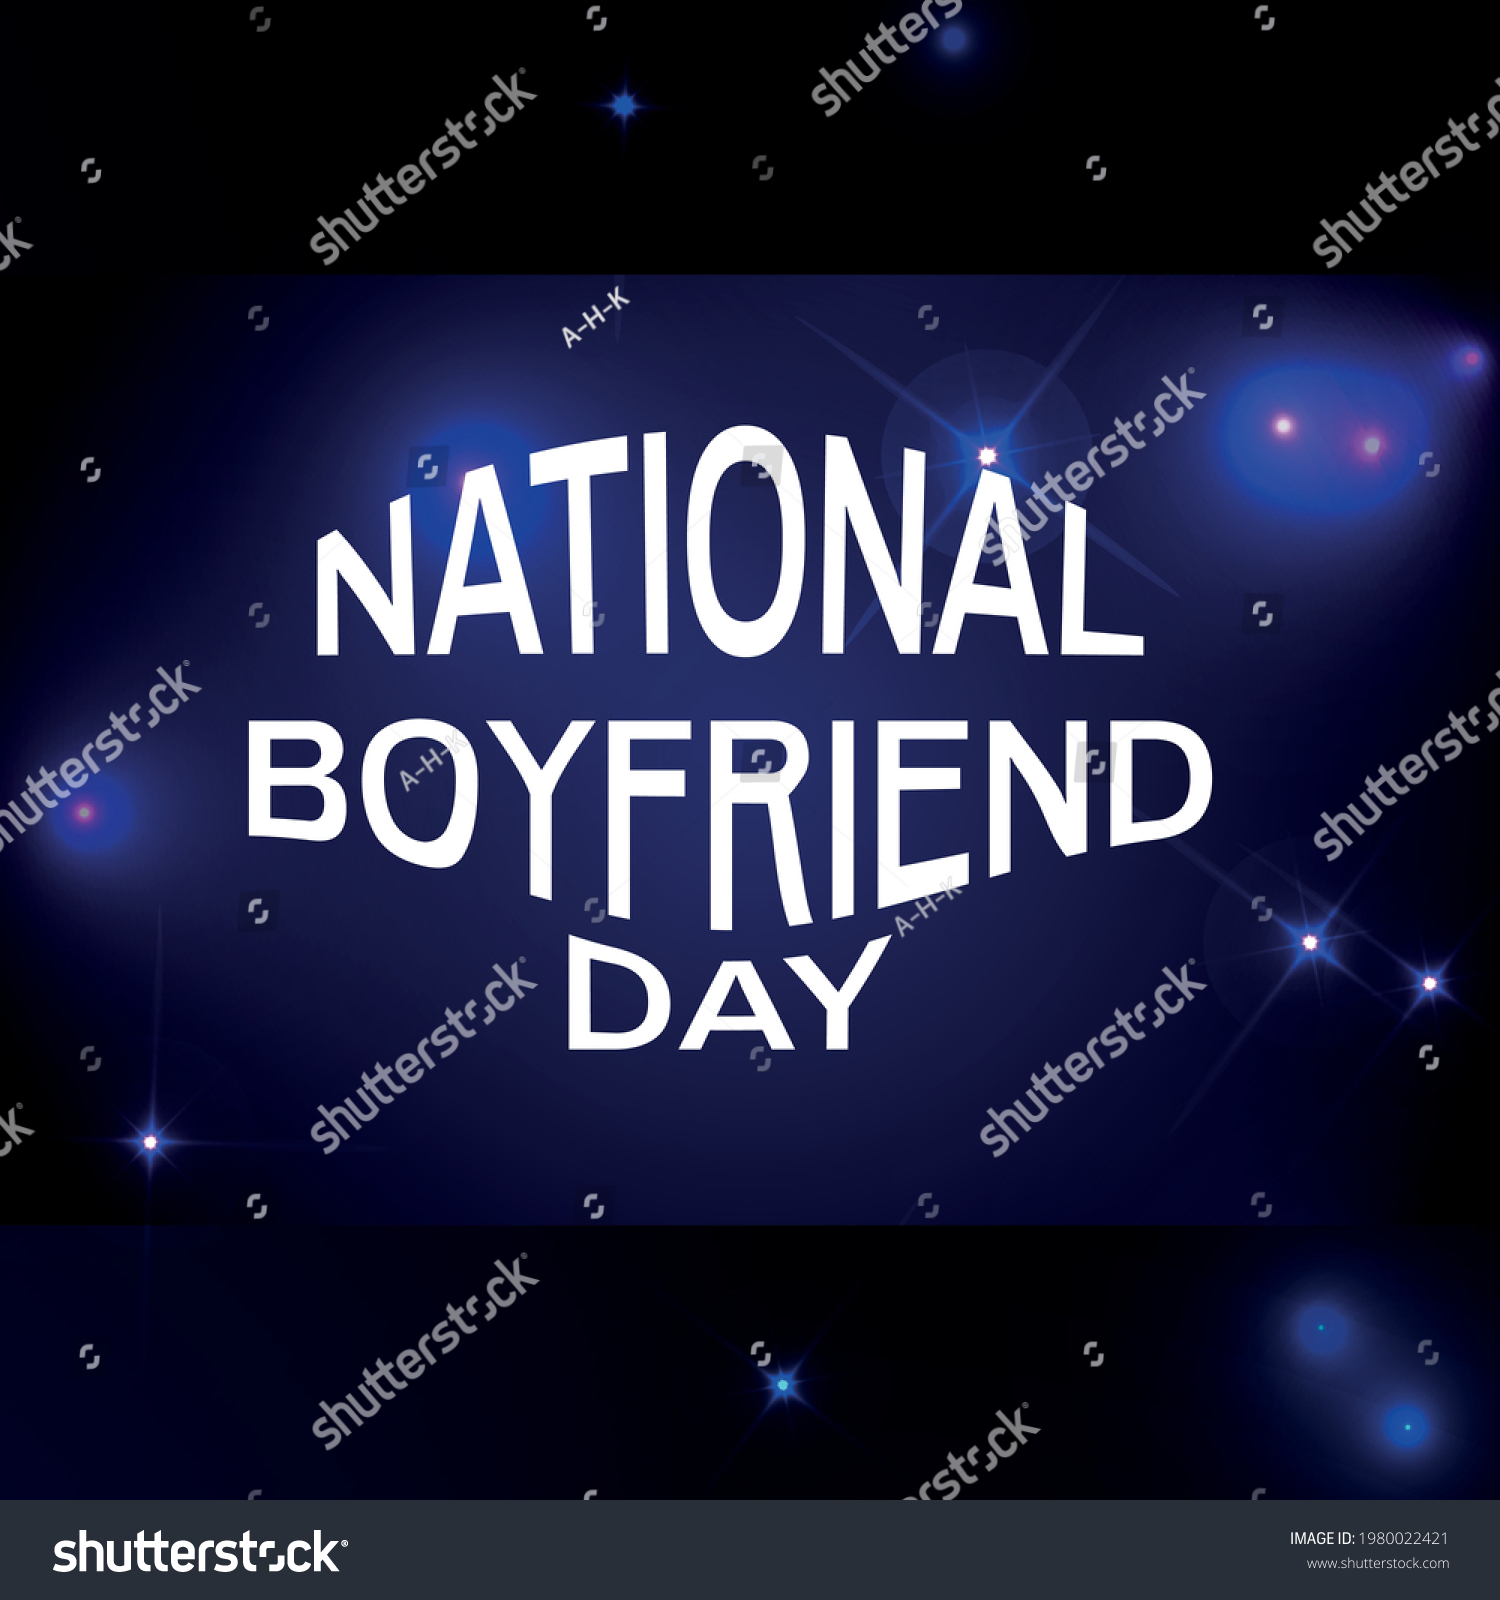 878 National Boyfriend Day Images, Stock Photos & Vectors Shutterstock